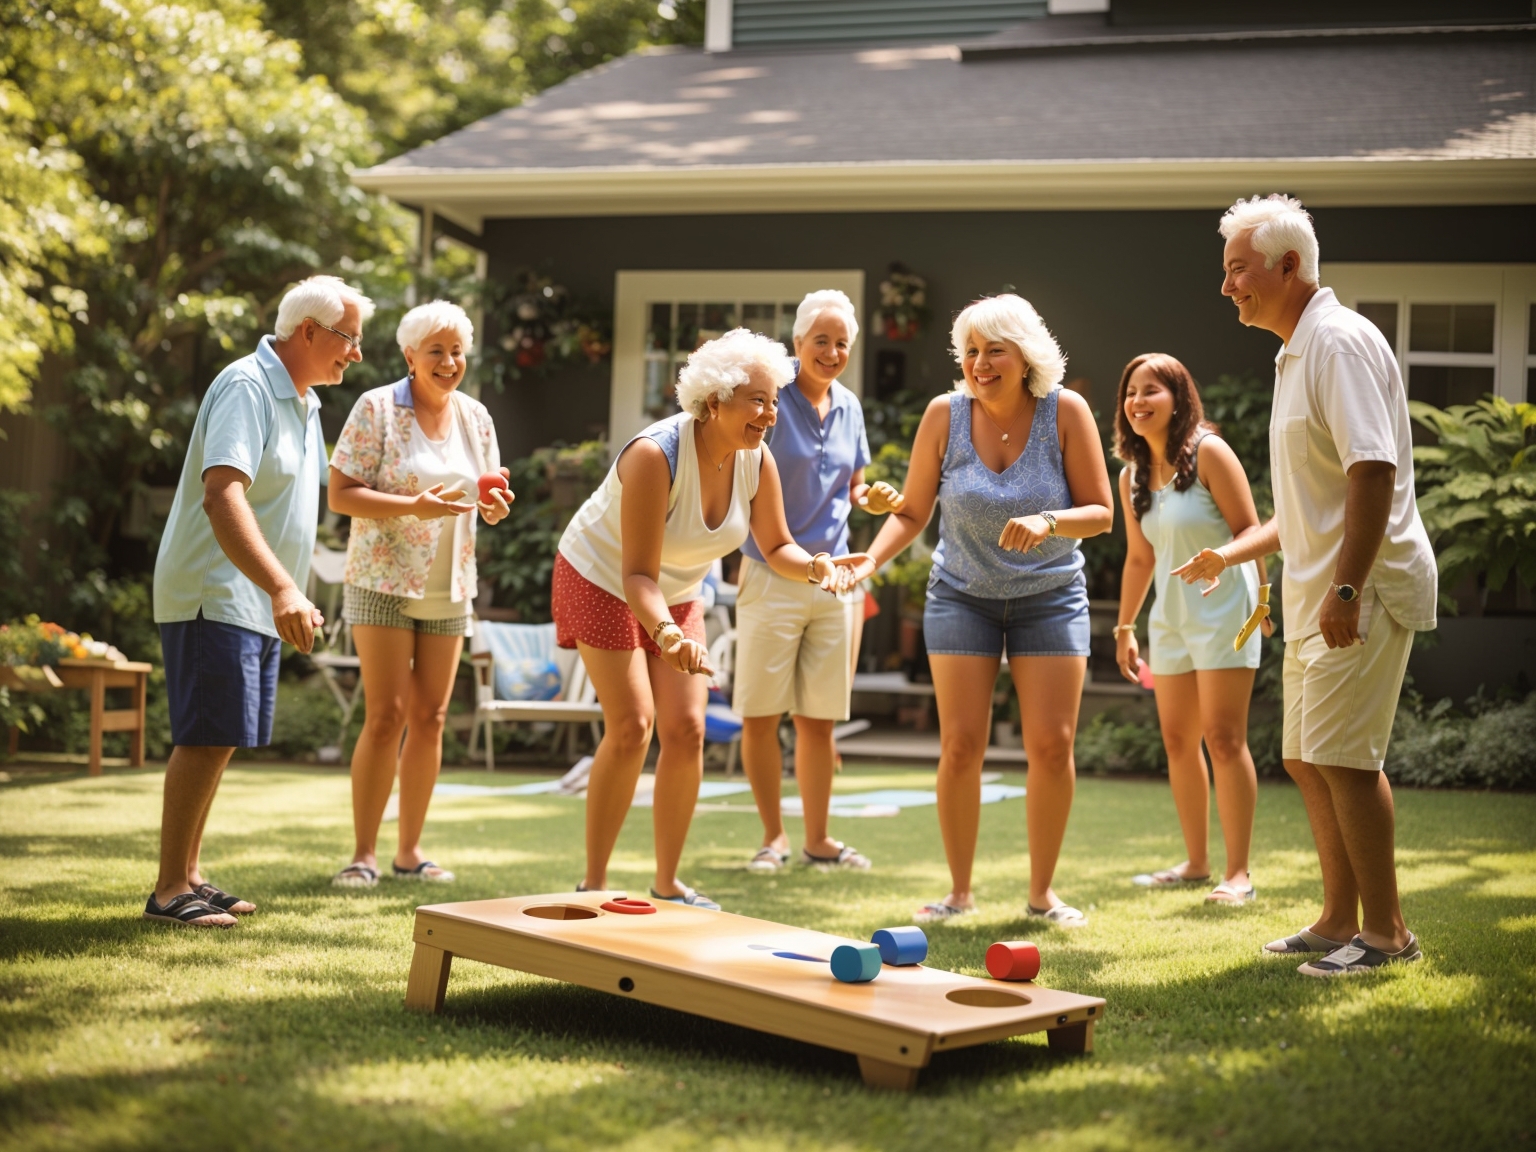 Group of older adults playing Cornhole